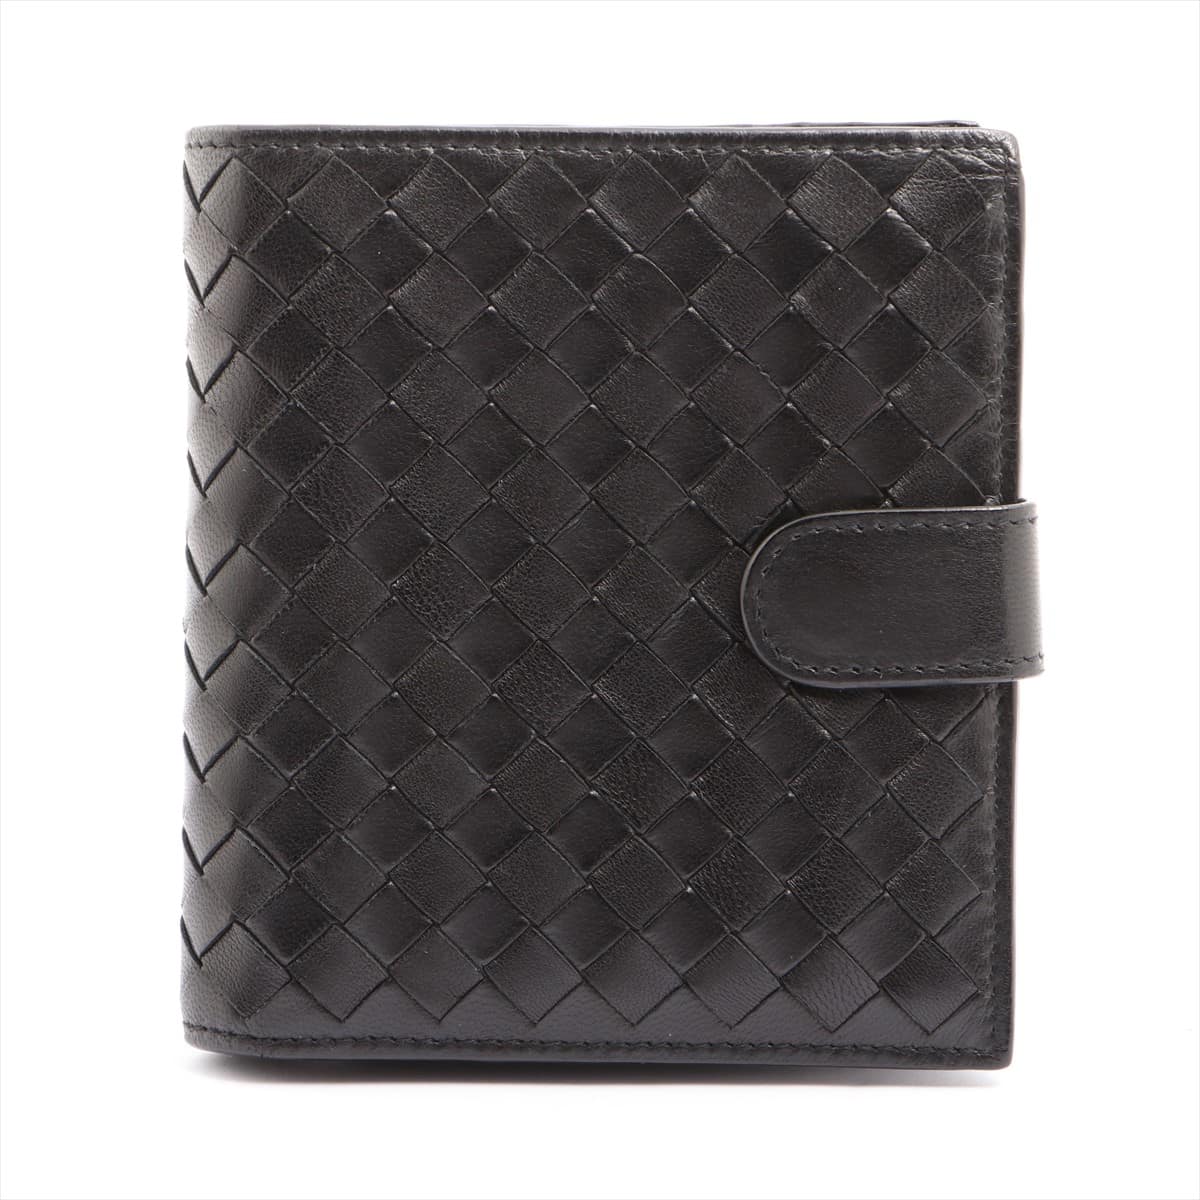 Bottega Veneta Intrecciato Leather Wallet Black